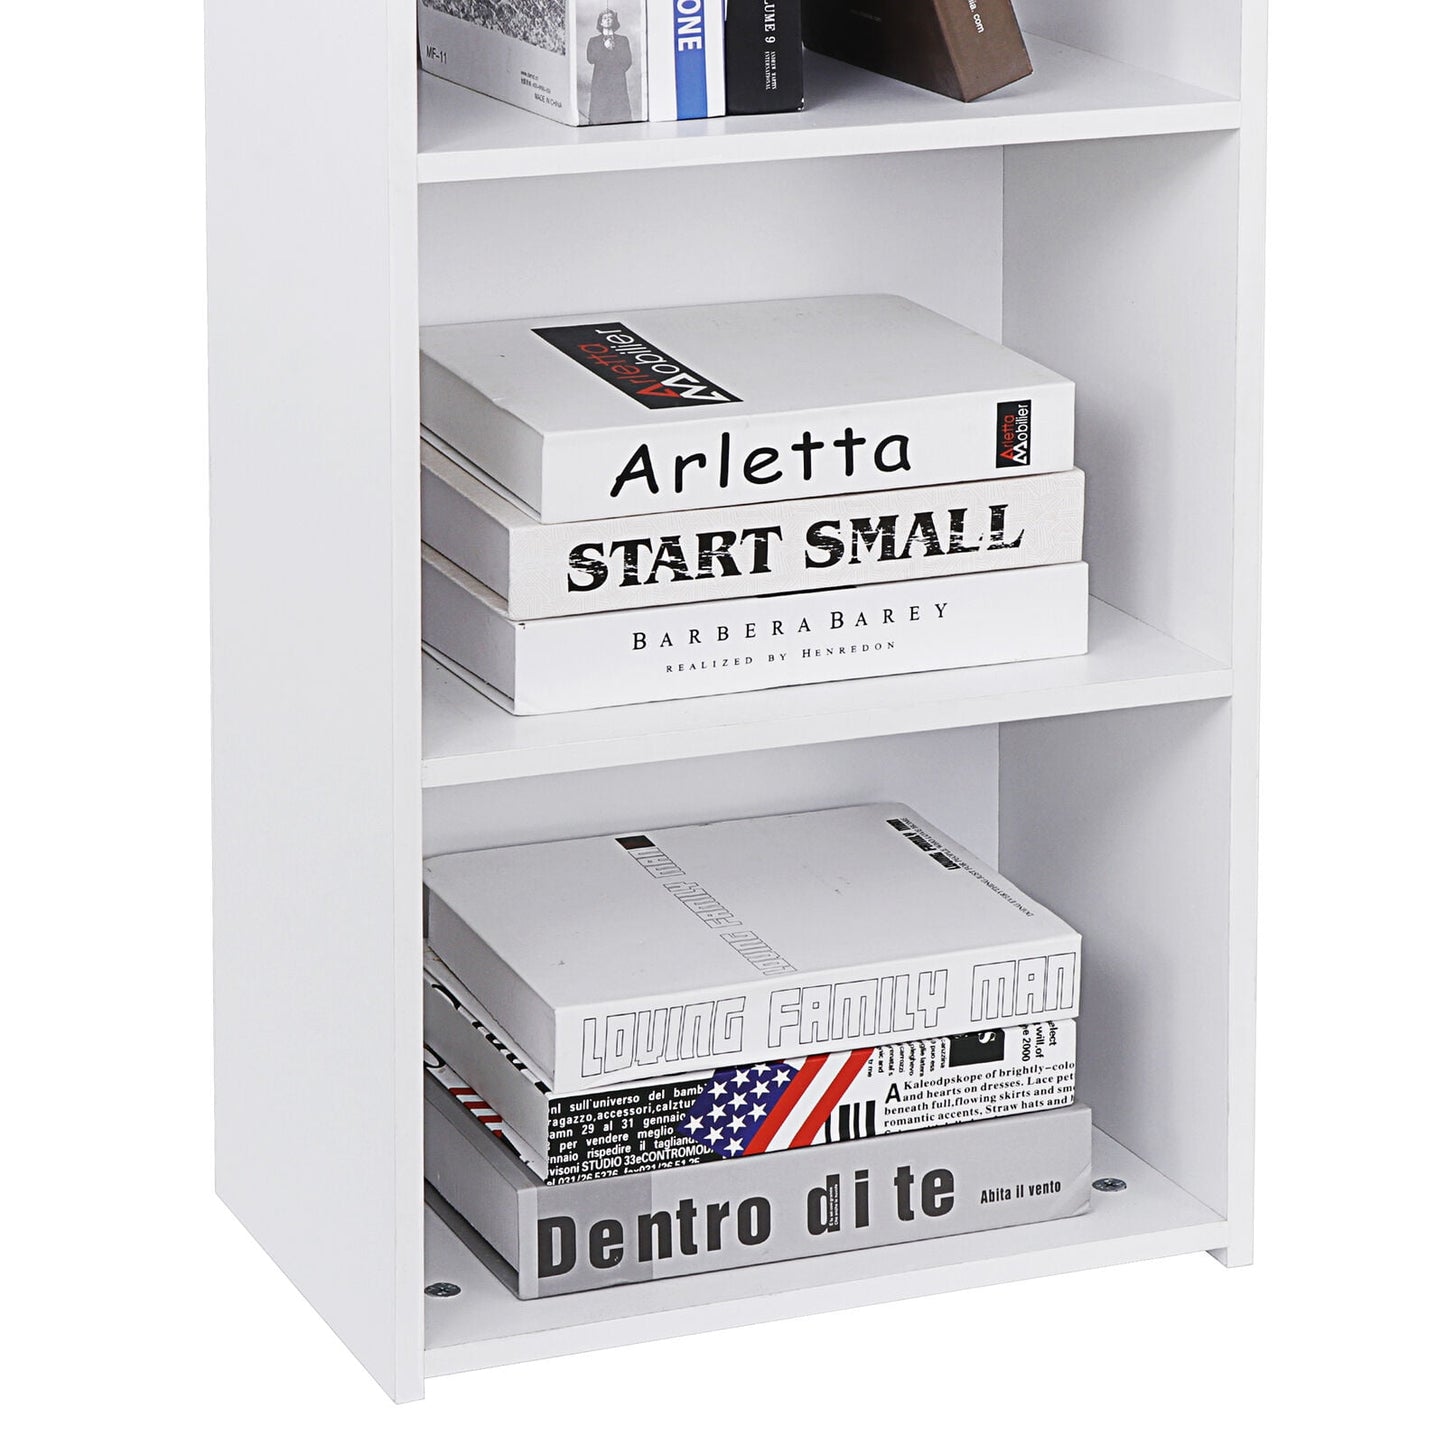 ZENY 5-Tiers Bookshelf Bookcase Multipurpose Collection Display Storage